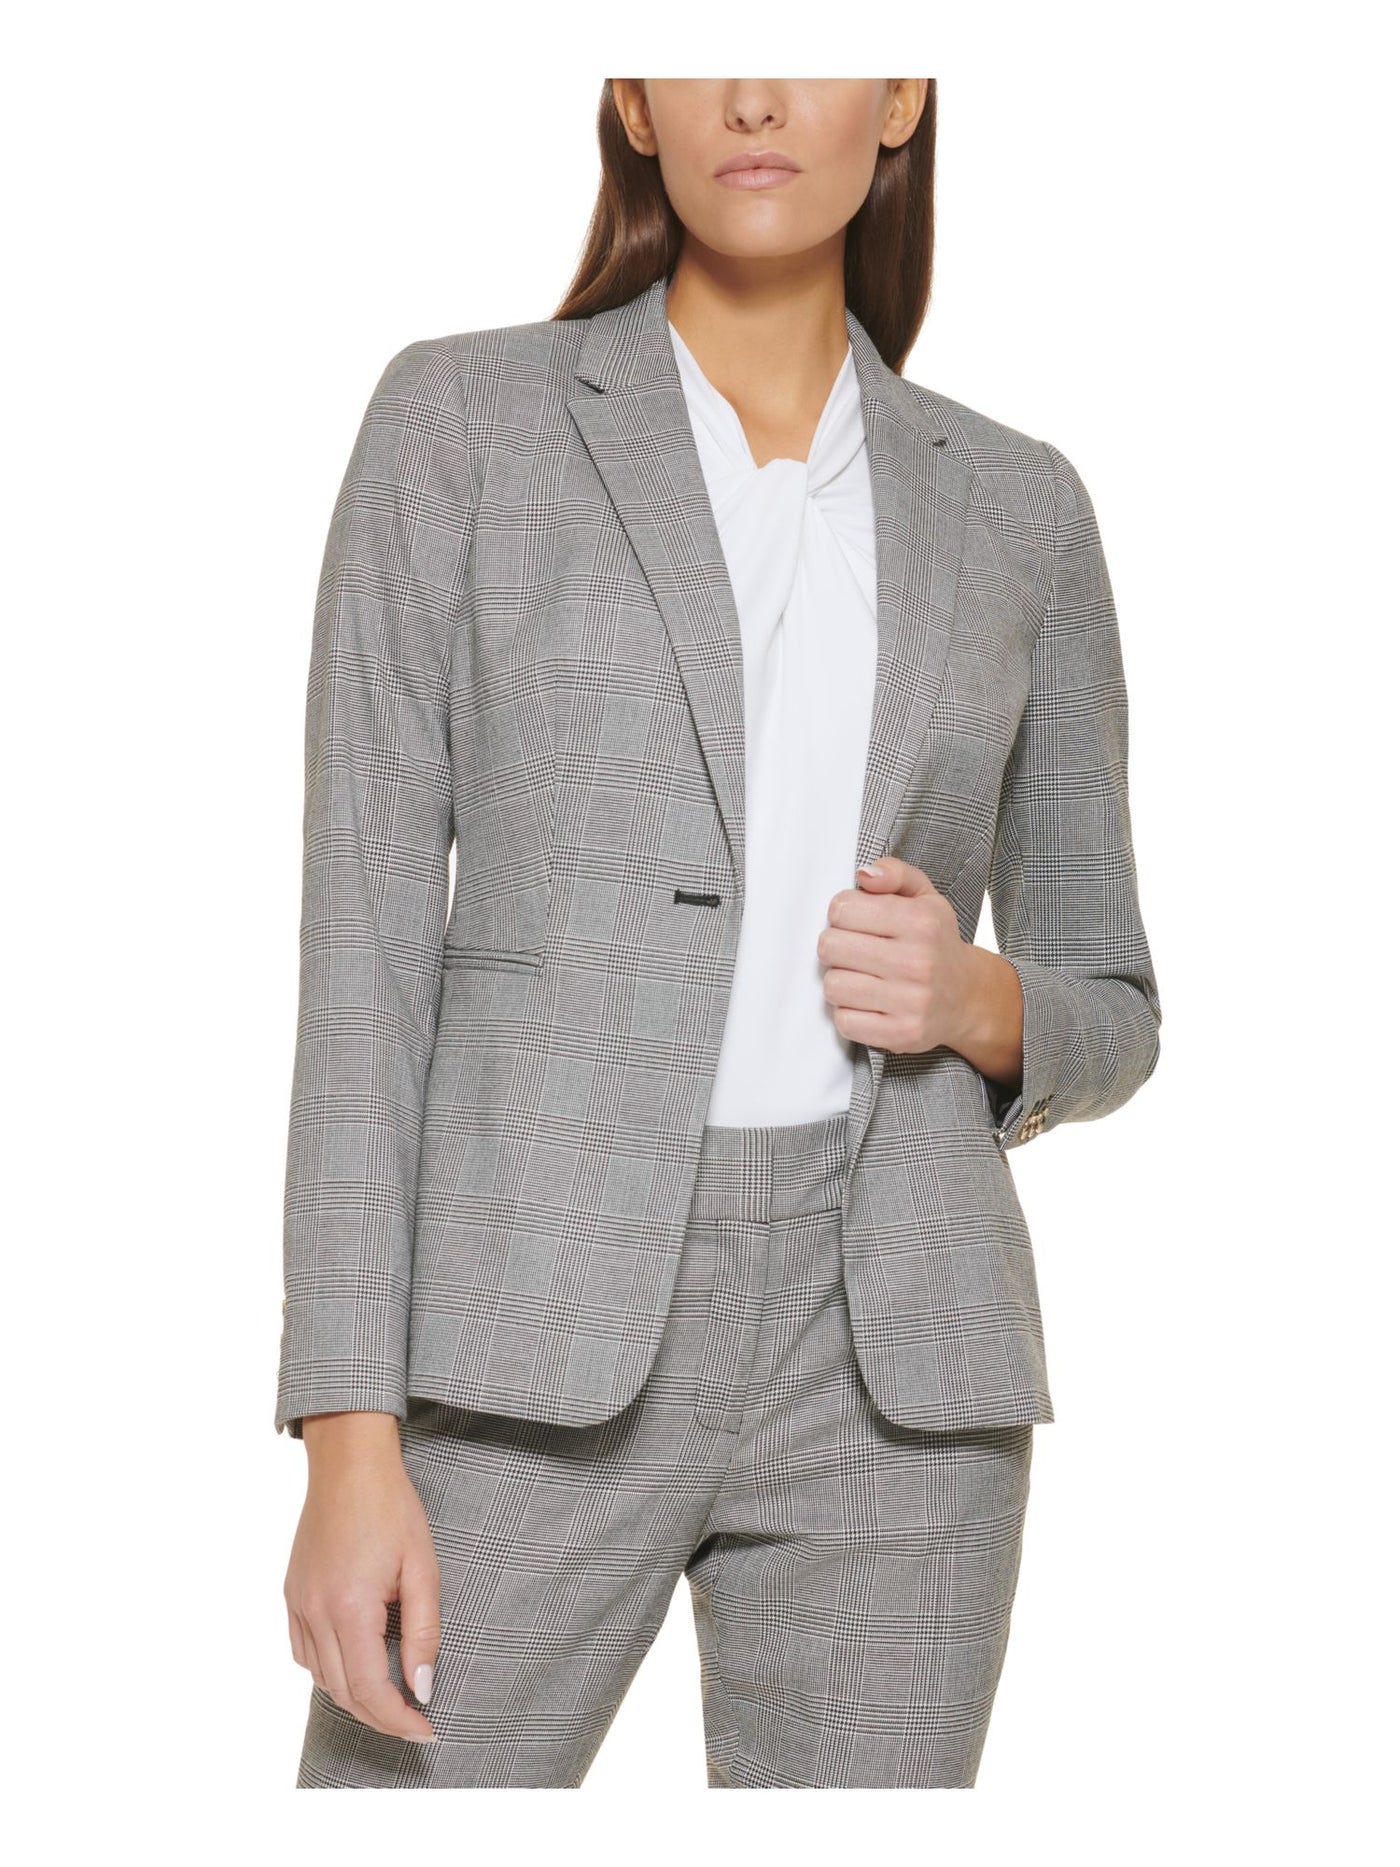 TOMMY HILFIGER Womens Gray Plaid Wear To Work Blazer Jacket 16